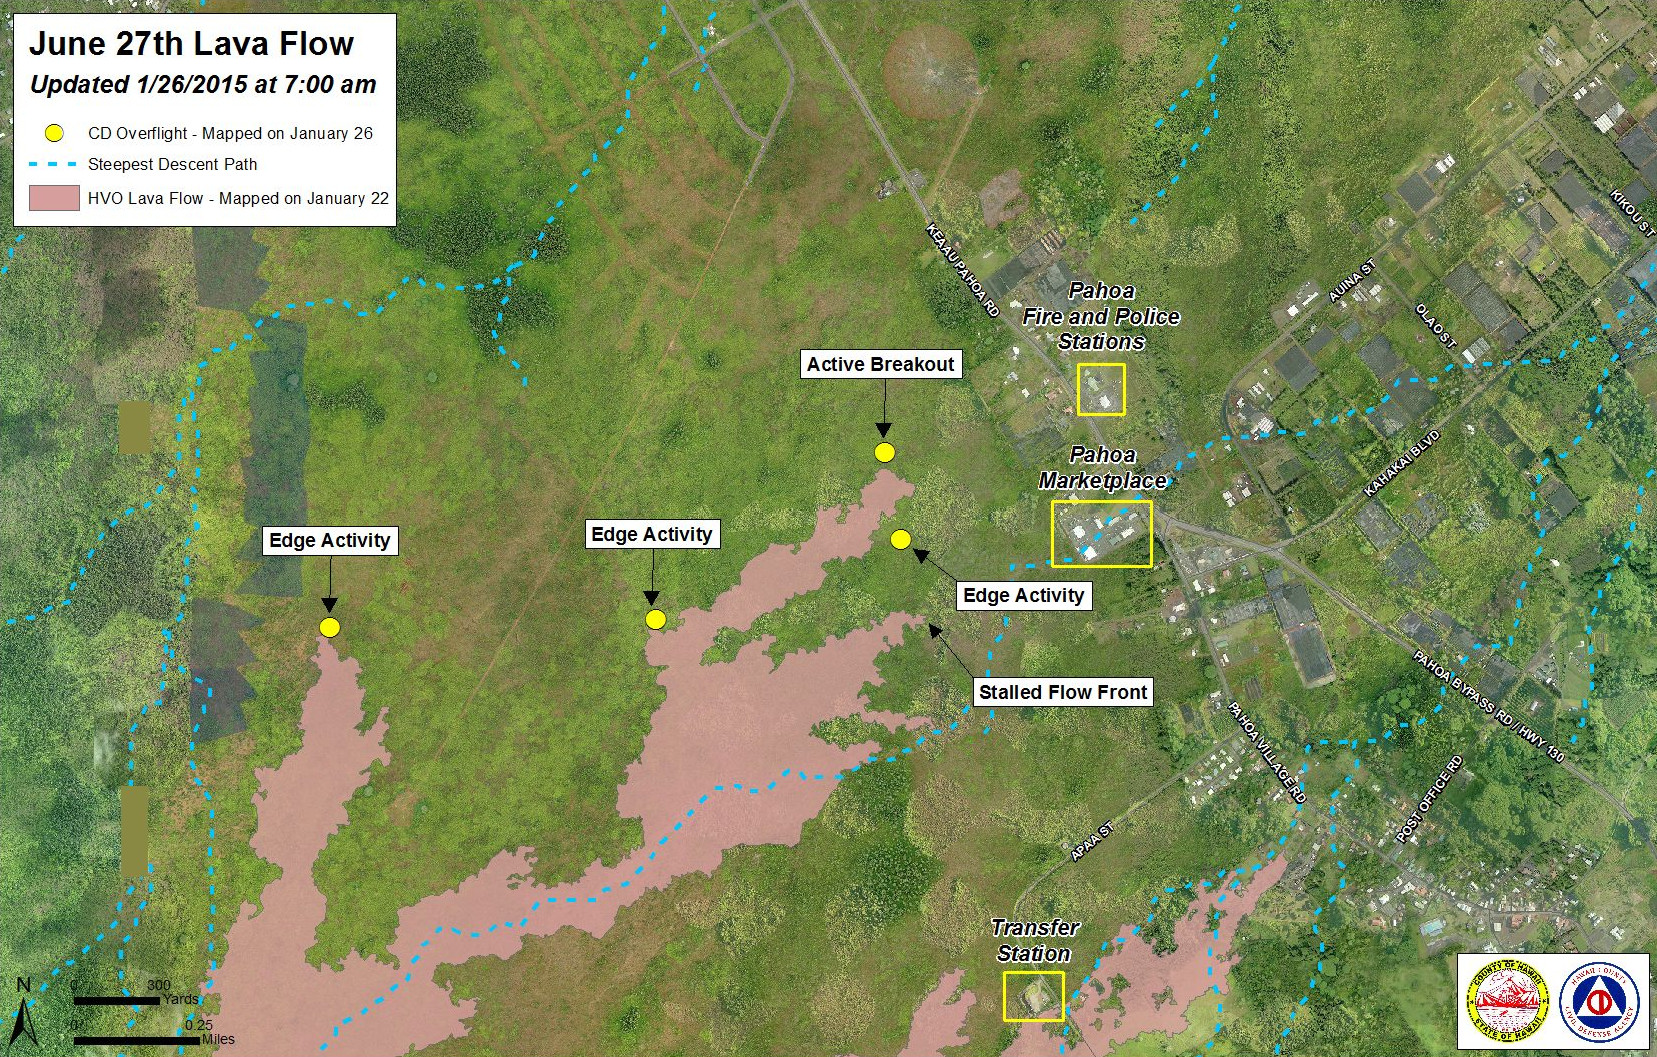 Civil Defense Lava Flow Map - Updated Monday, 1/26/15 at 7:00 am